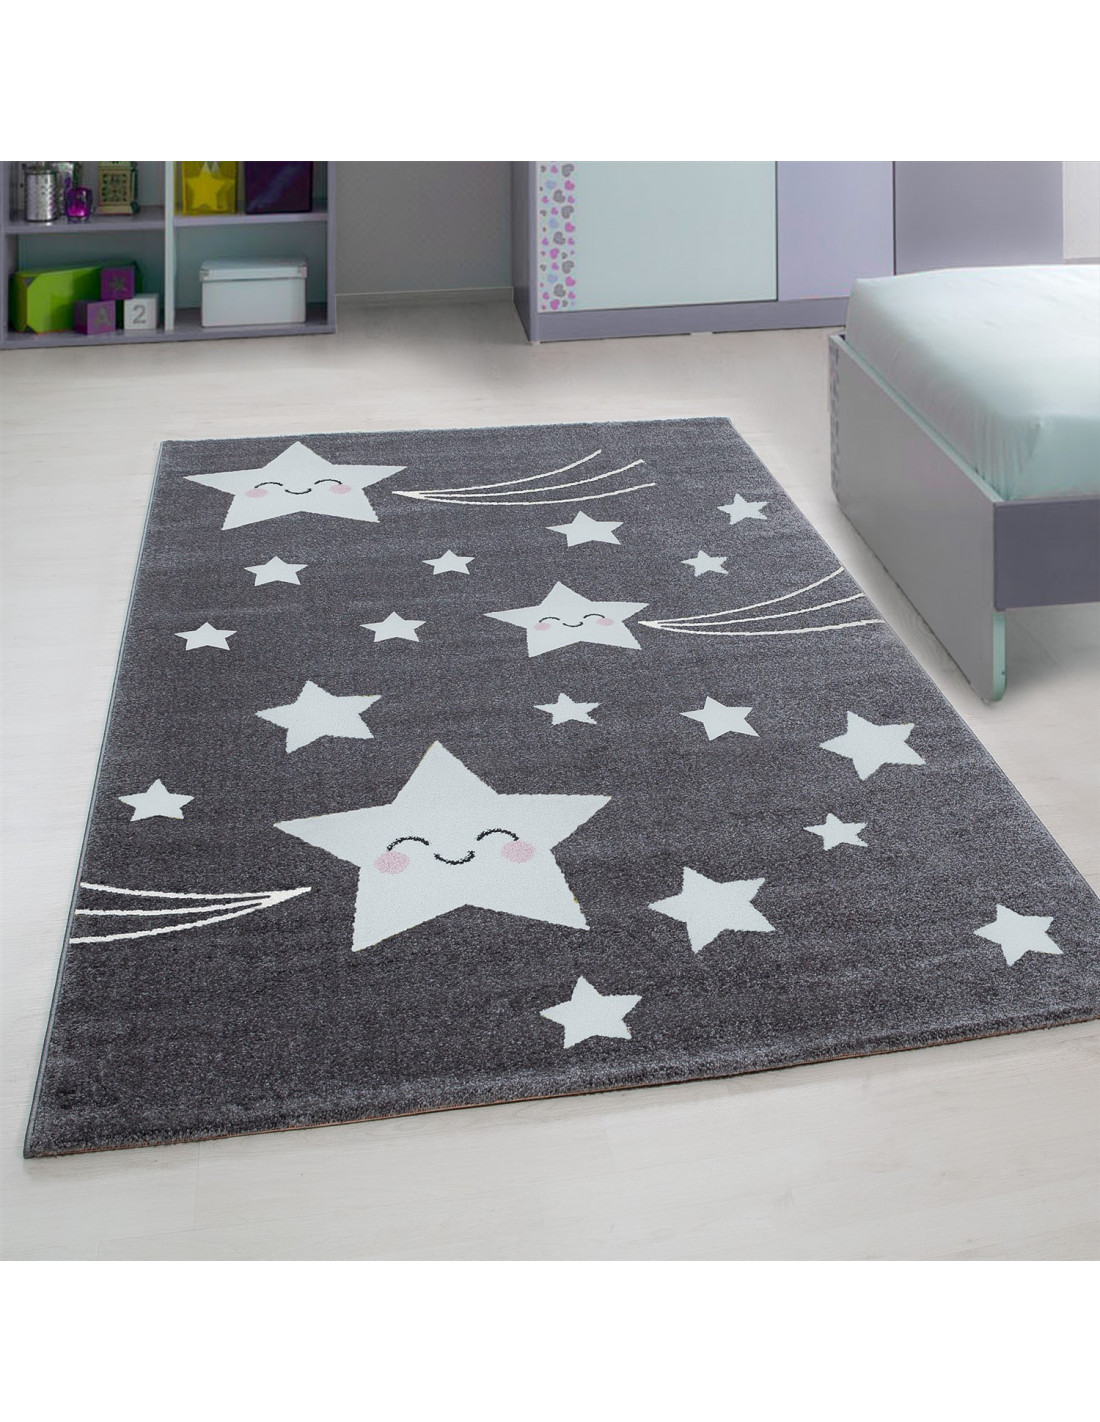 https://www.carpet1001.de/21619-thickbox_default/alfombra-infantil-habitacion-infantil-alfombra-estampado-de-estrellas-gris-blanco.jpg